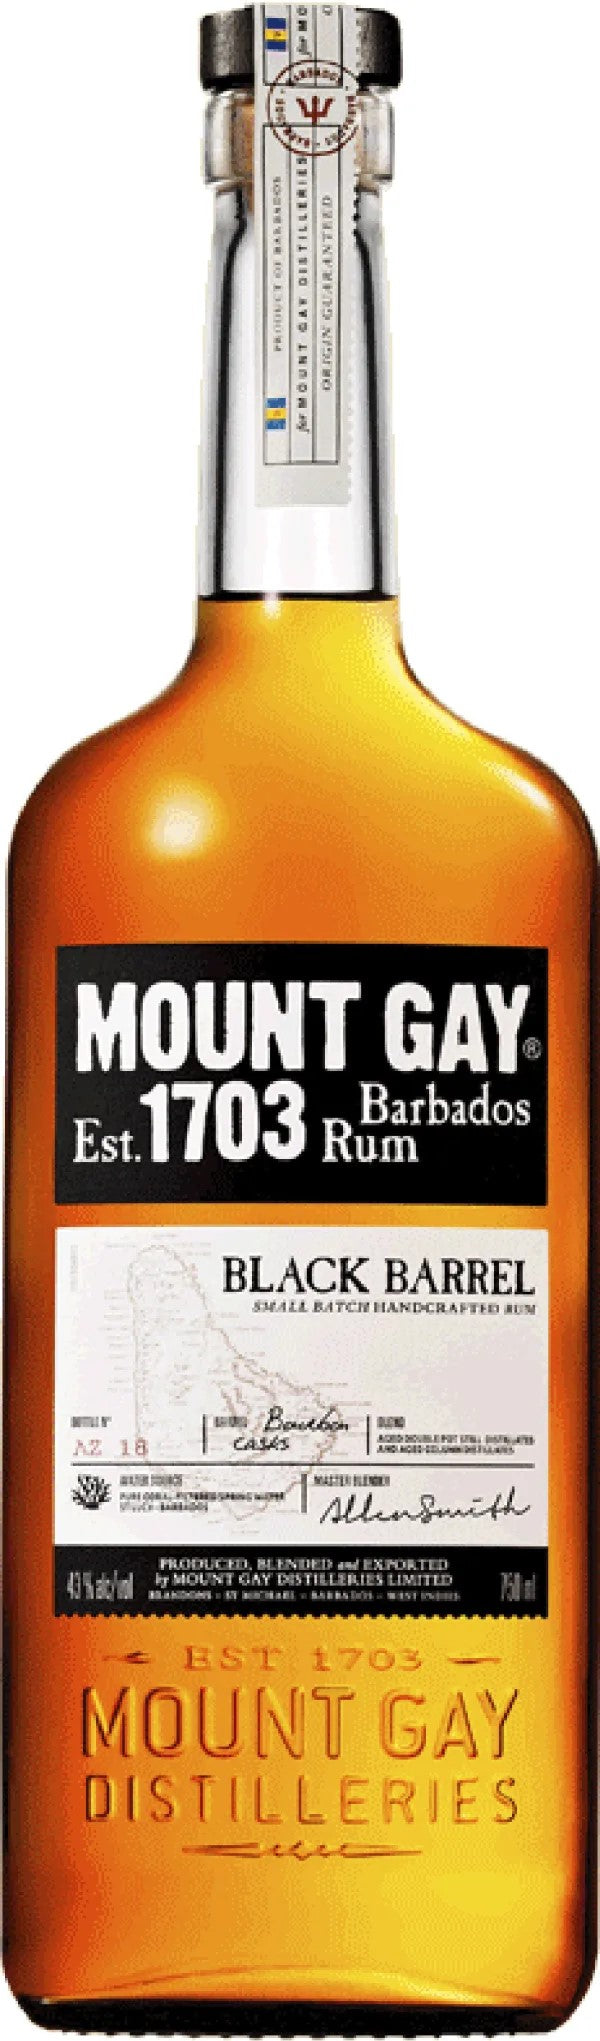 MT GAY BLACK BARREL RUM